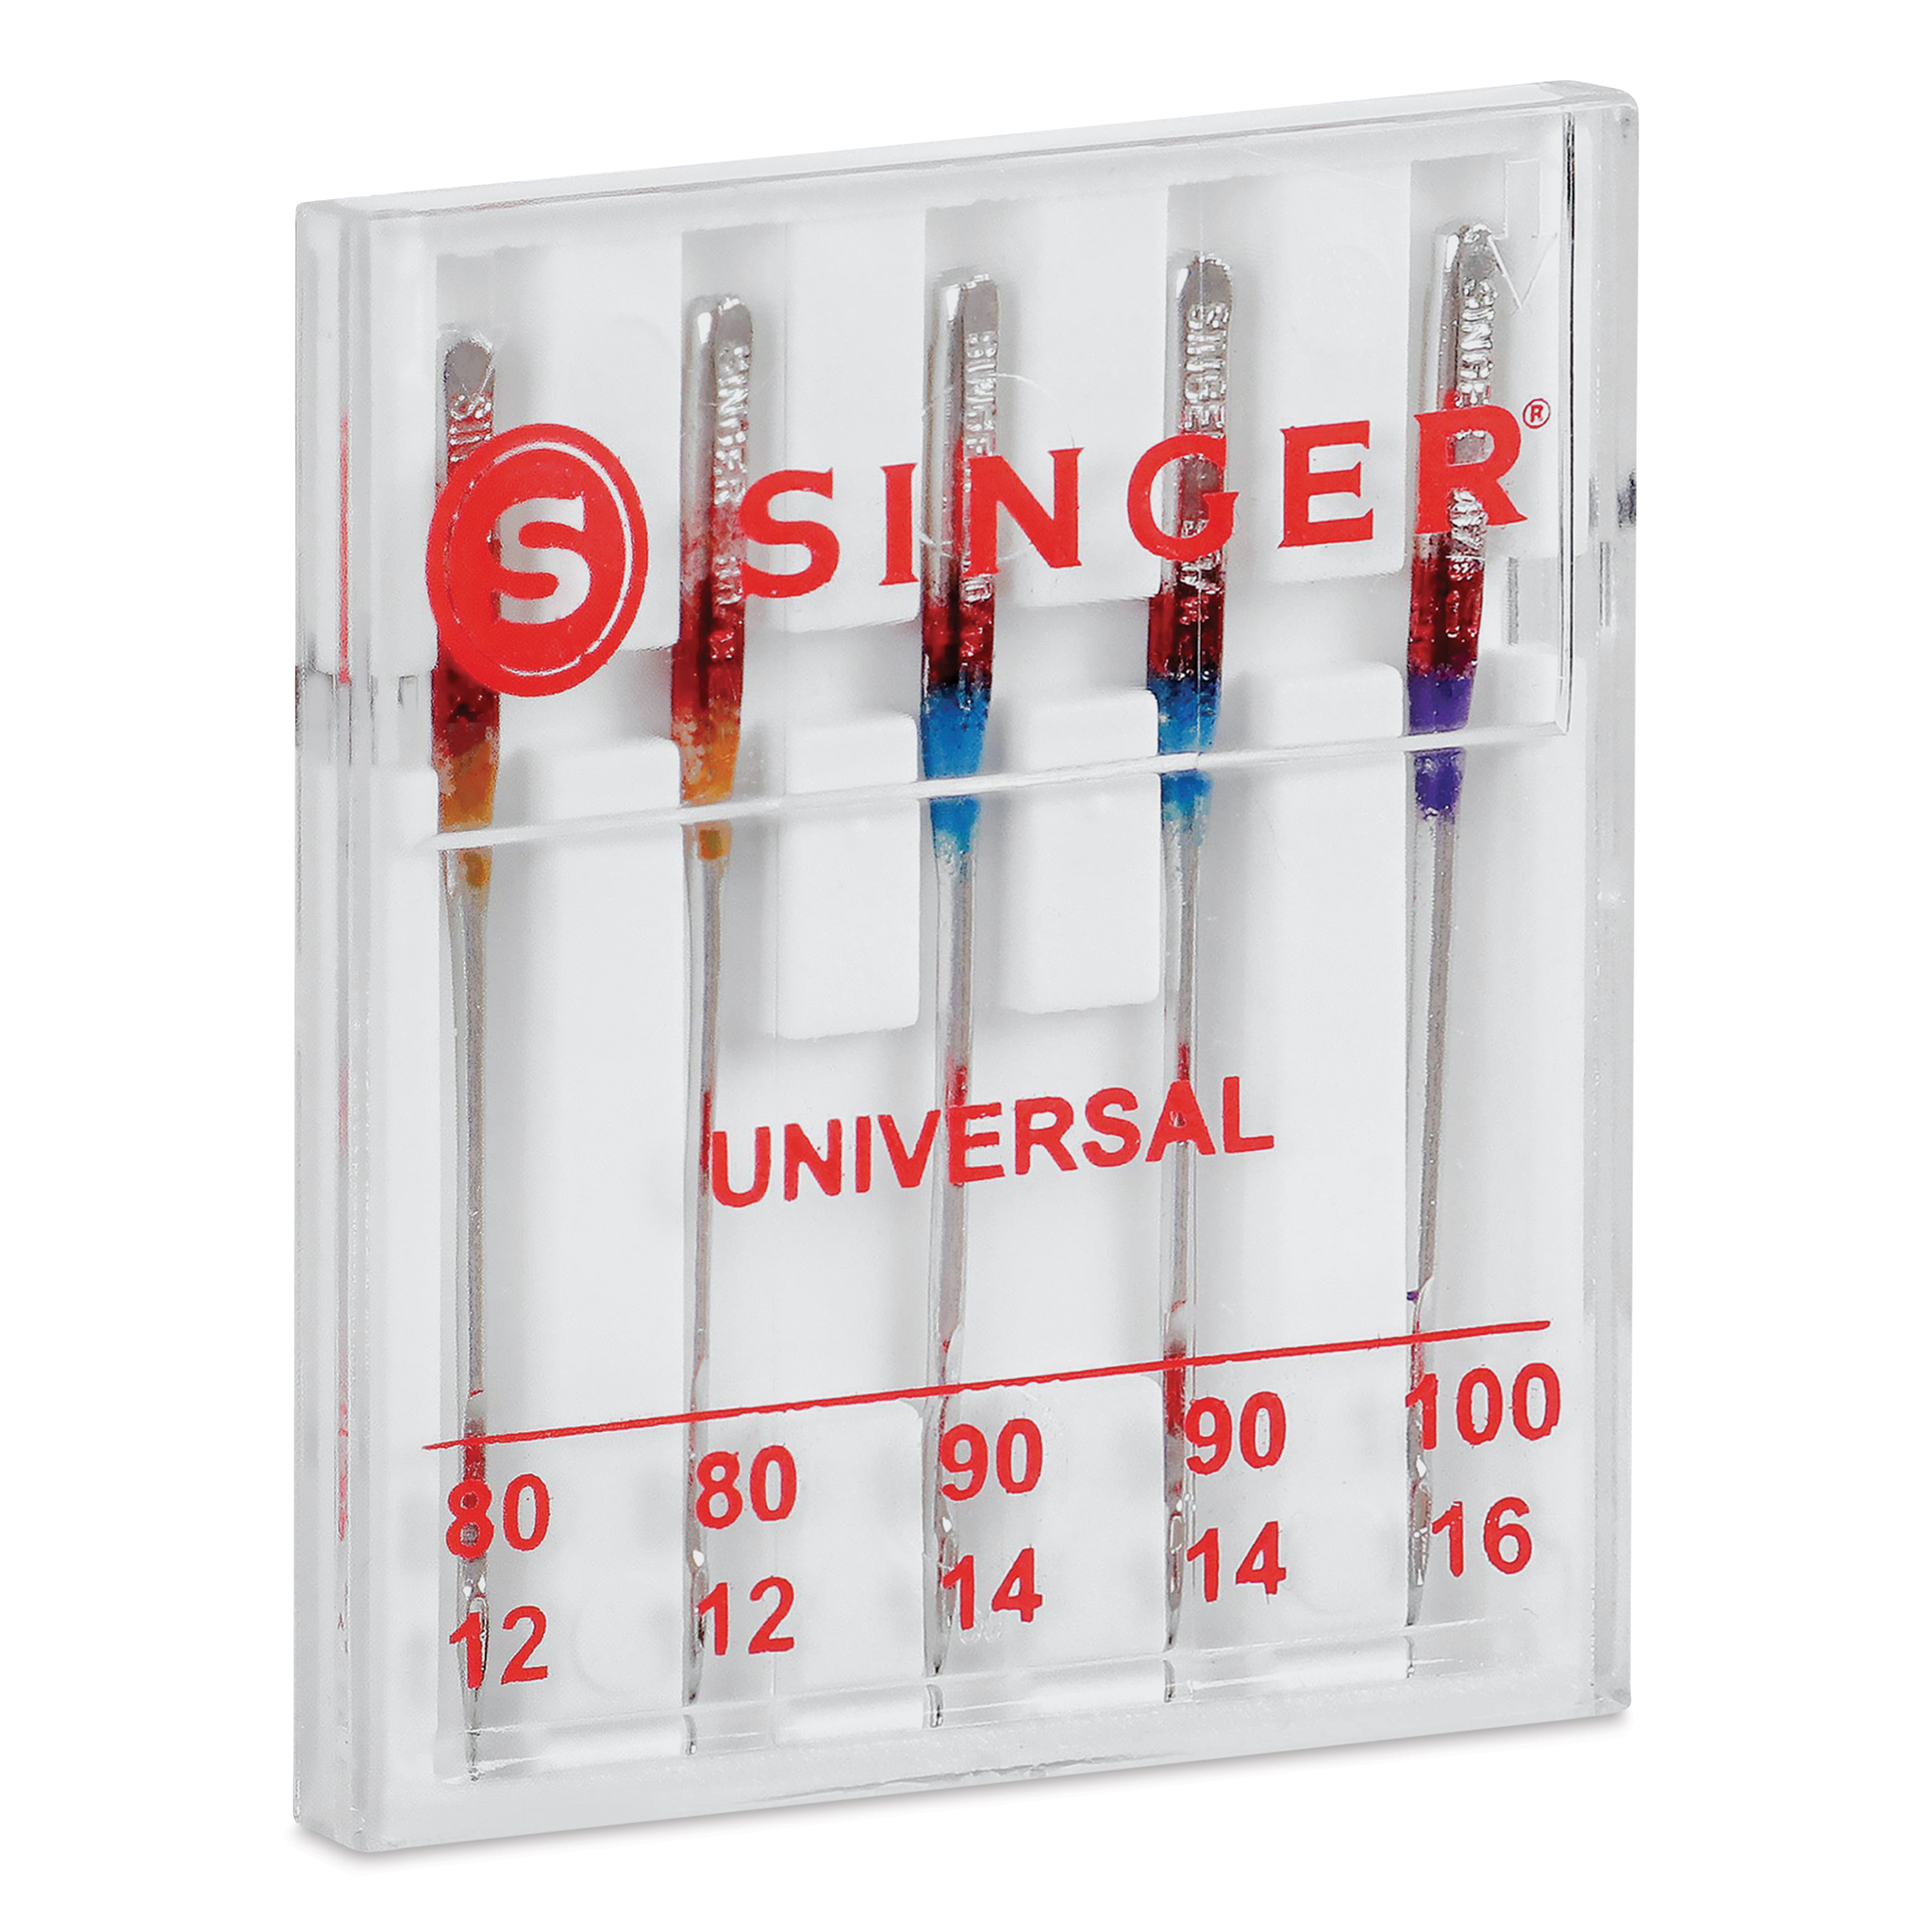 Singer Sewing Machine Needles - Universal, Assorted, Pkg of 5